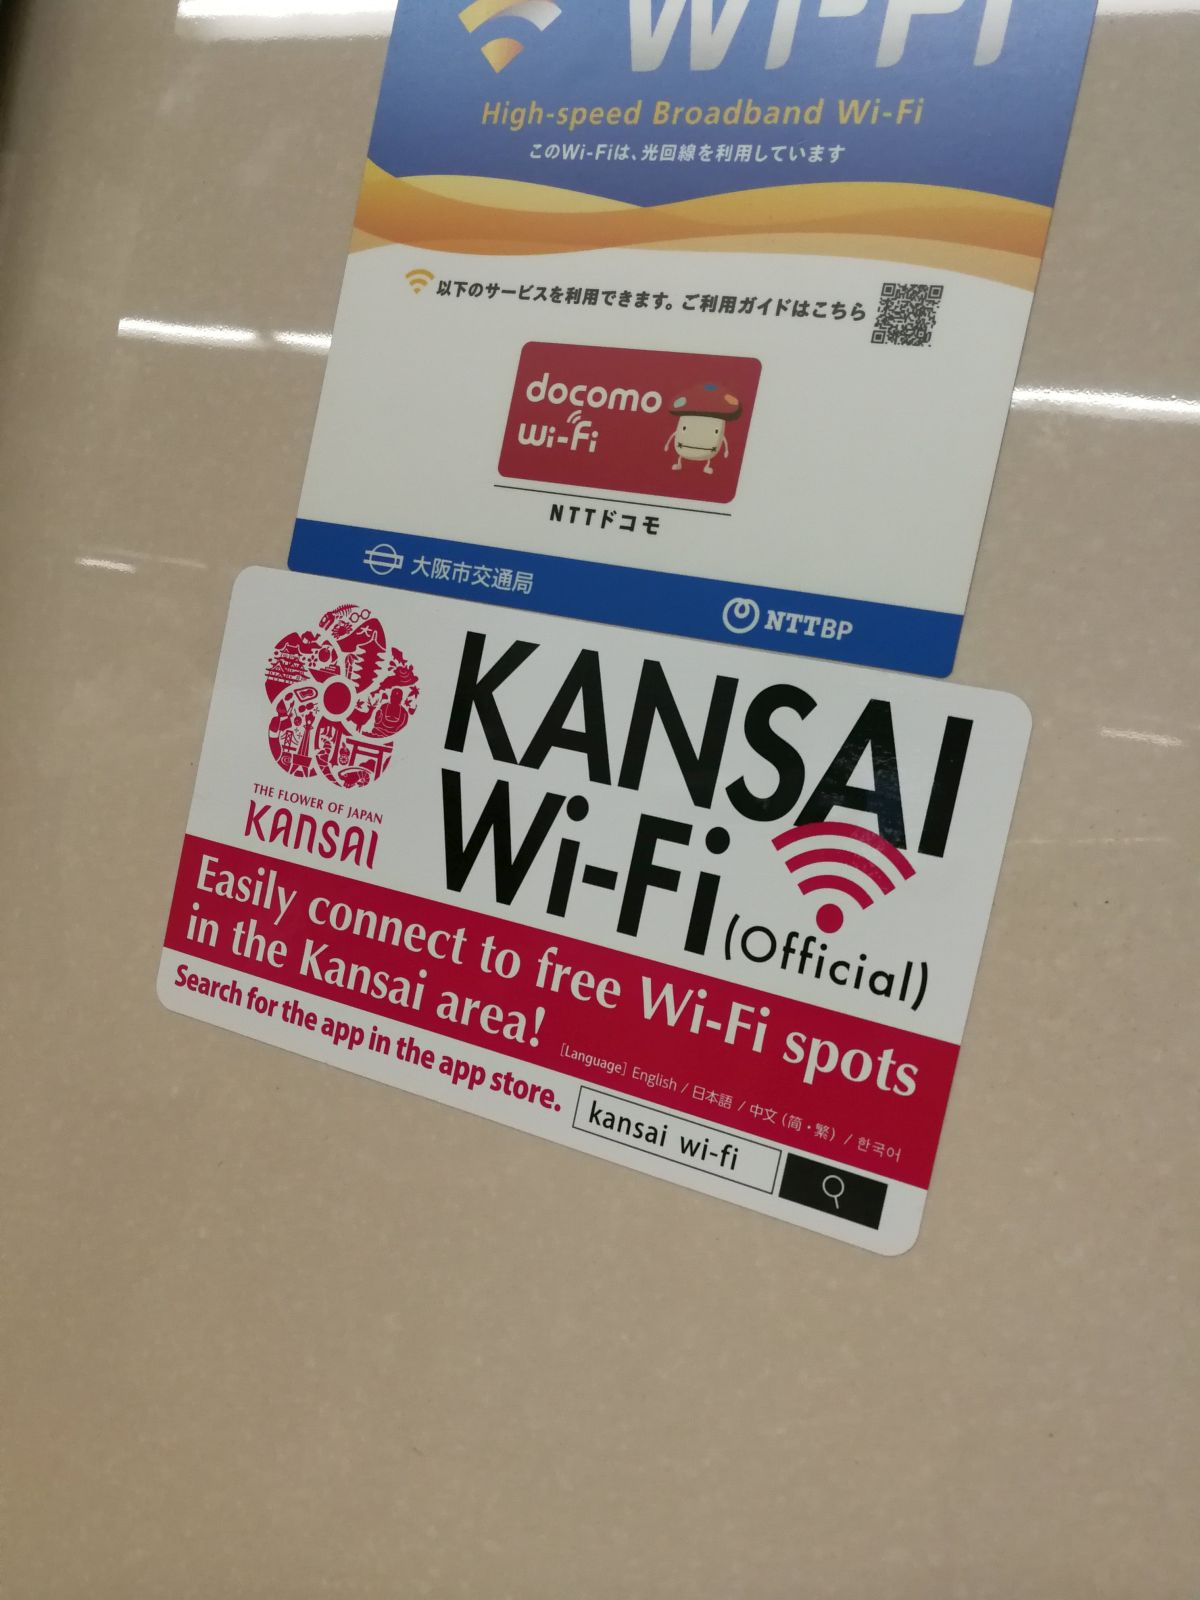 KANSAI Wi-Fi(Official)